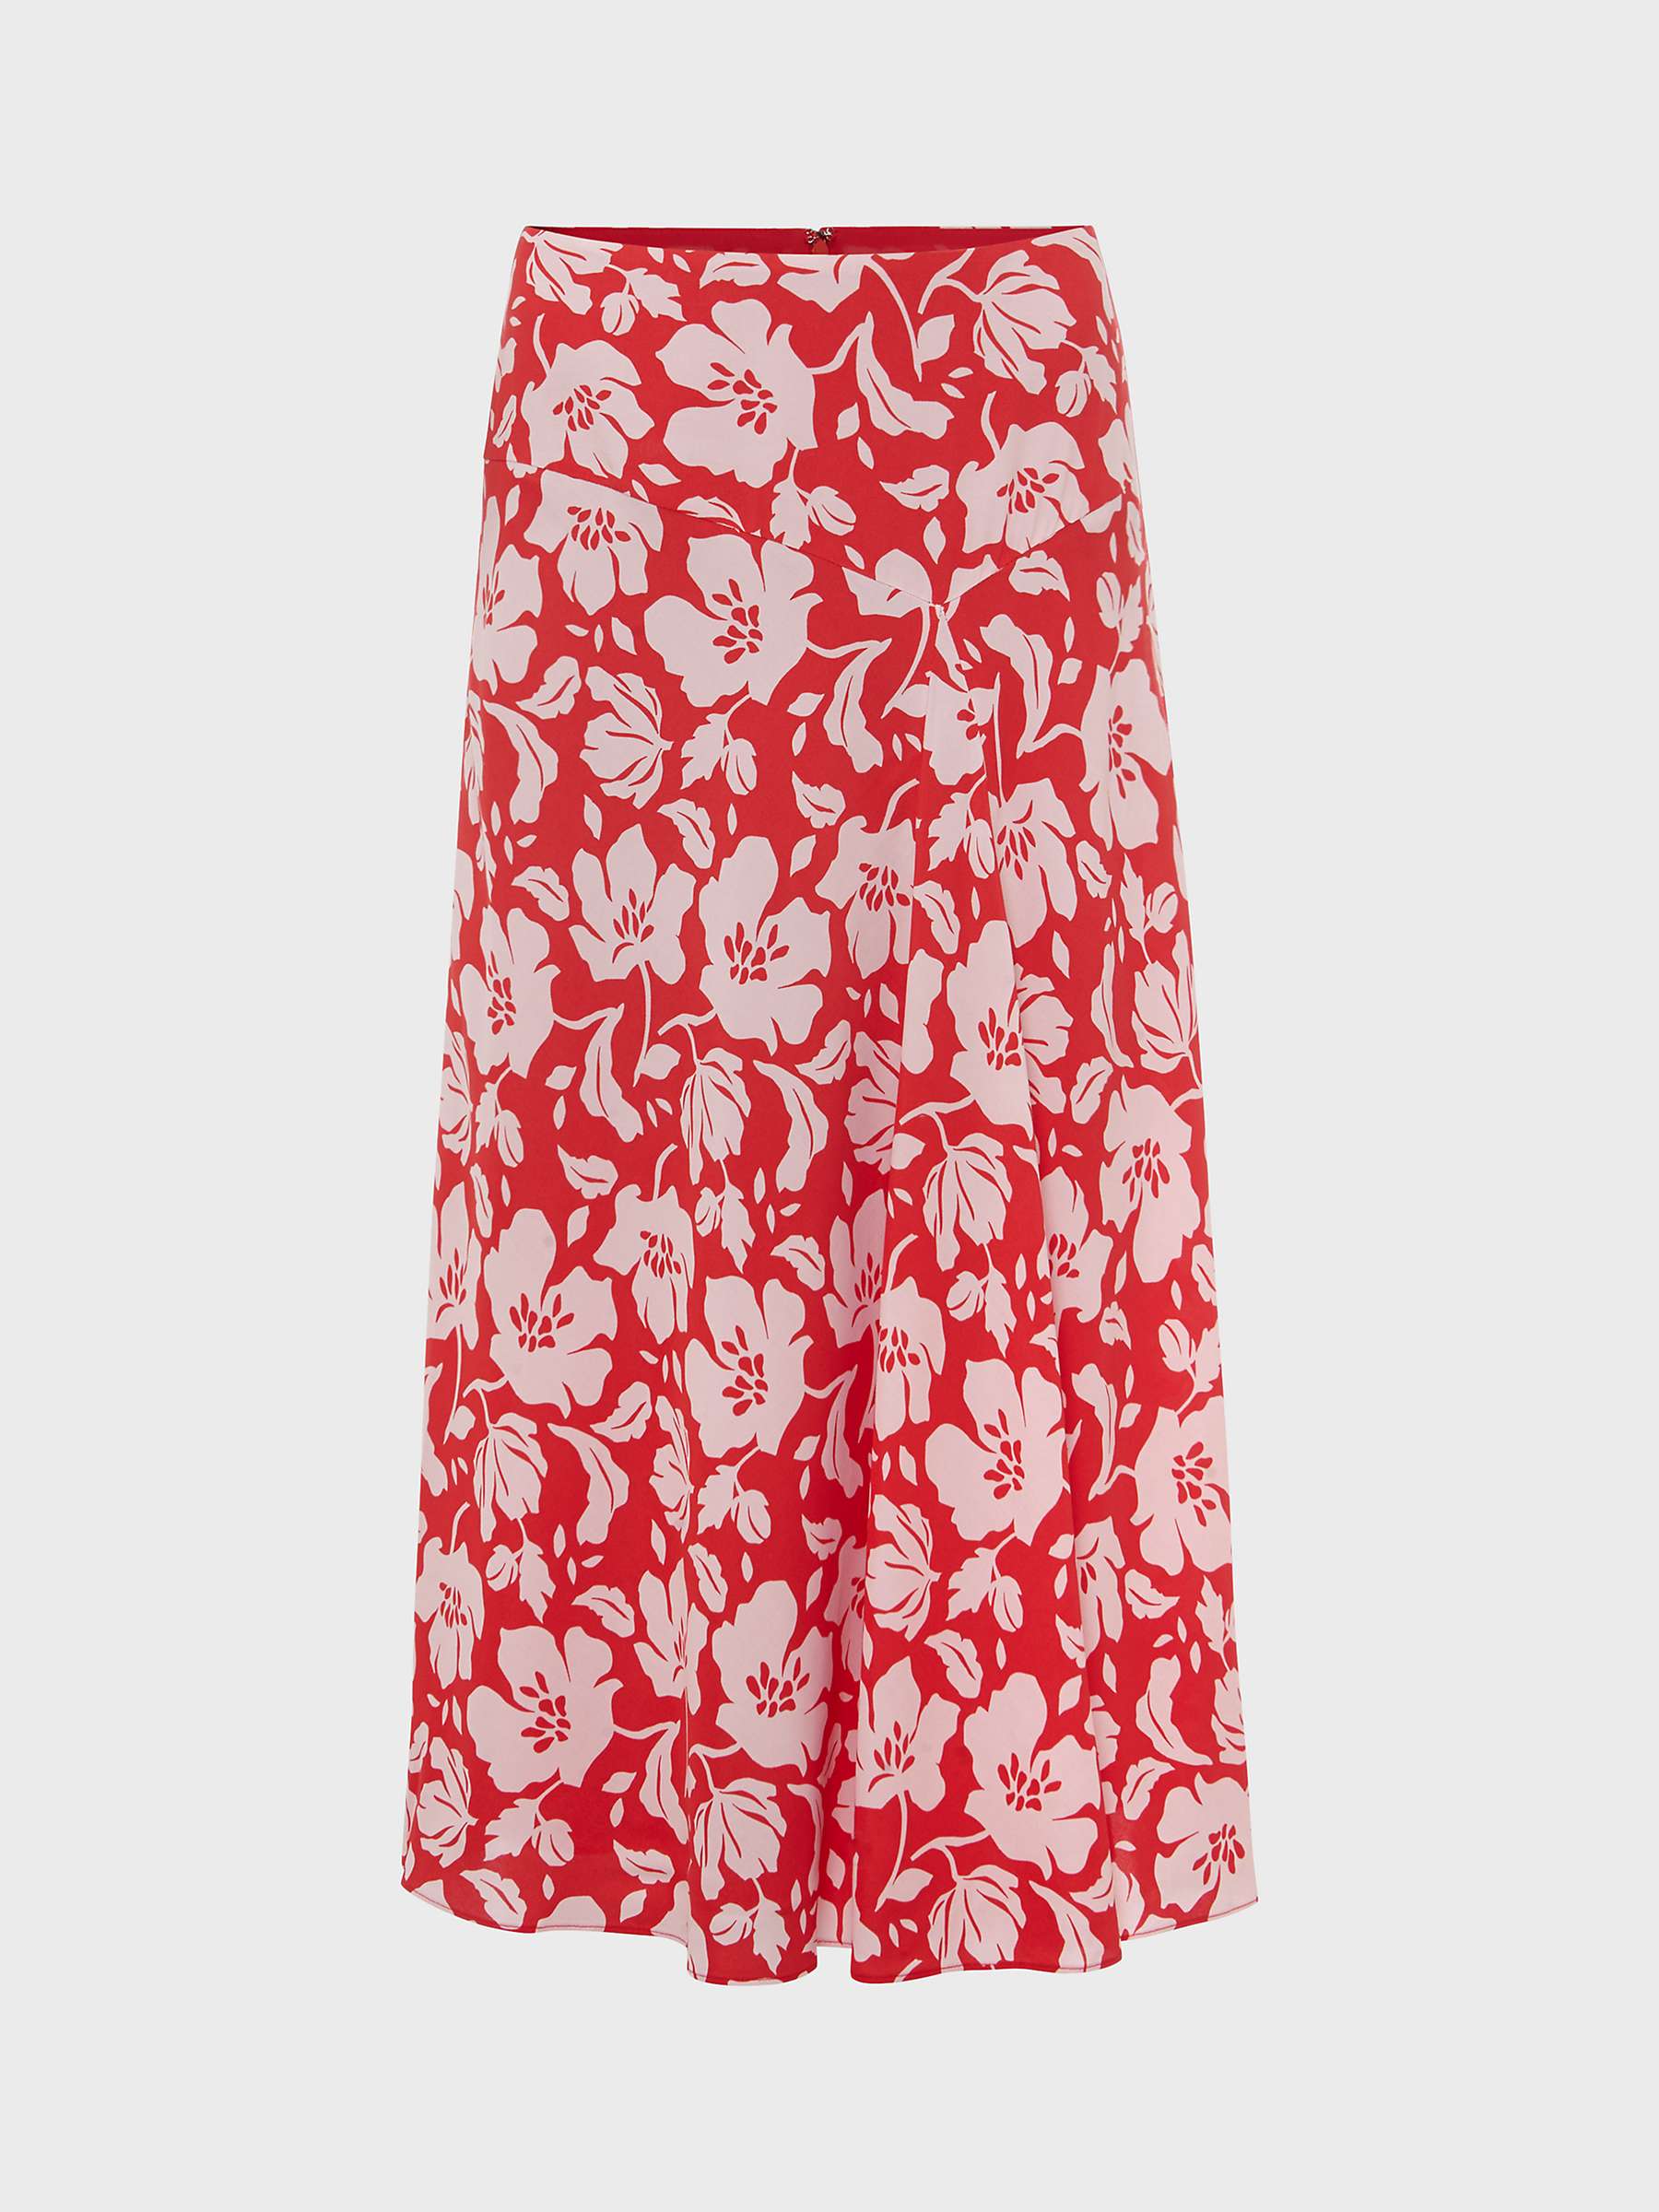 Hobbs Angie Floral Midi Skirt, Red/Pink at John Lewis & Partners